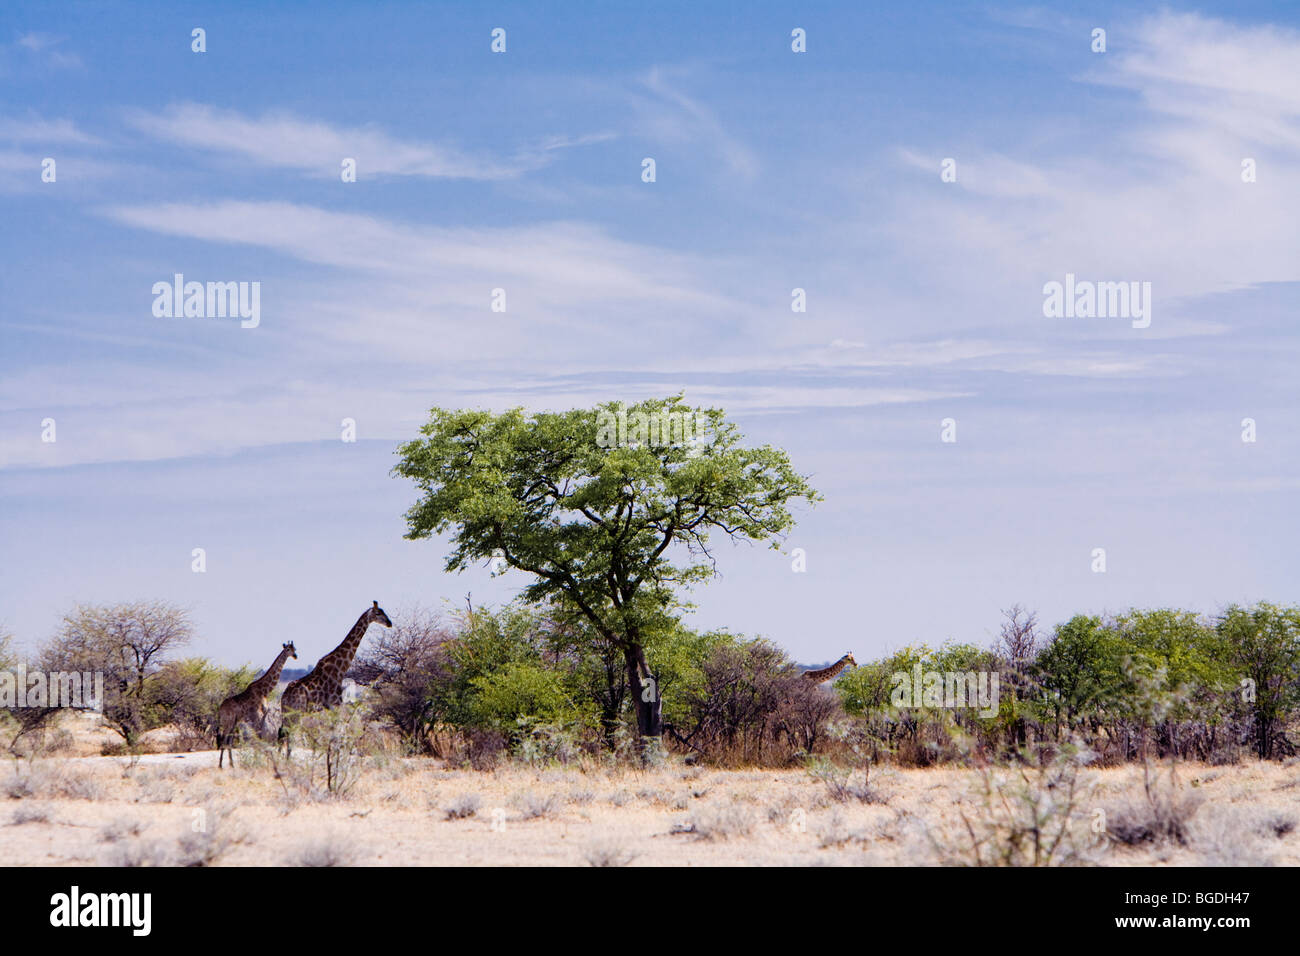 Girafe avec deux veaux. Communauté Girafe (Giraffa camelopardalis angolensis), Etosha National Park, Namibie Banque D'Images